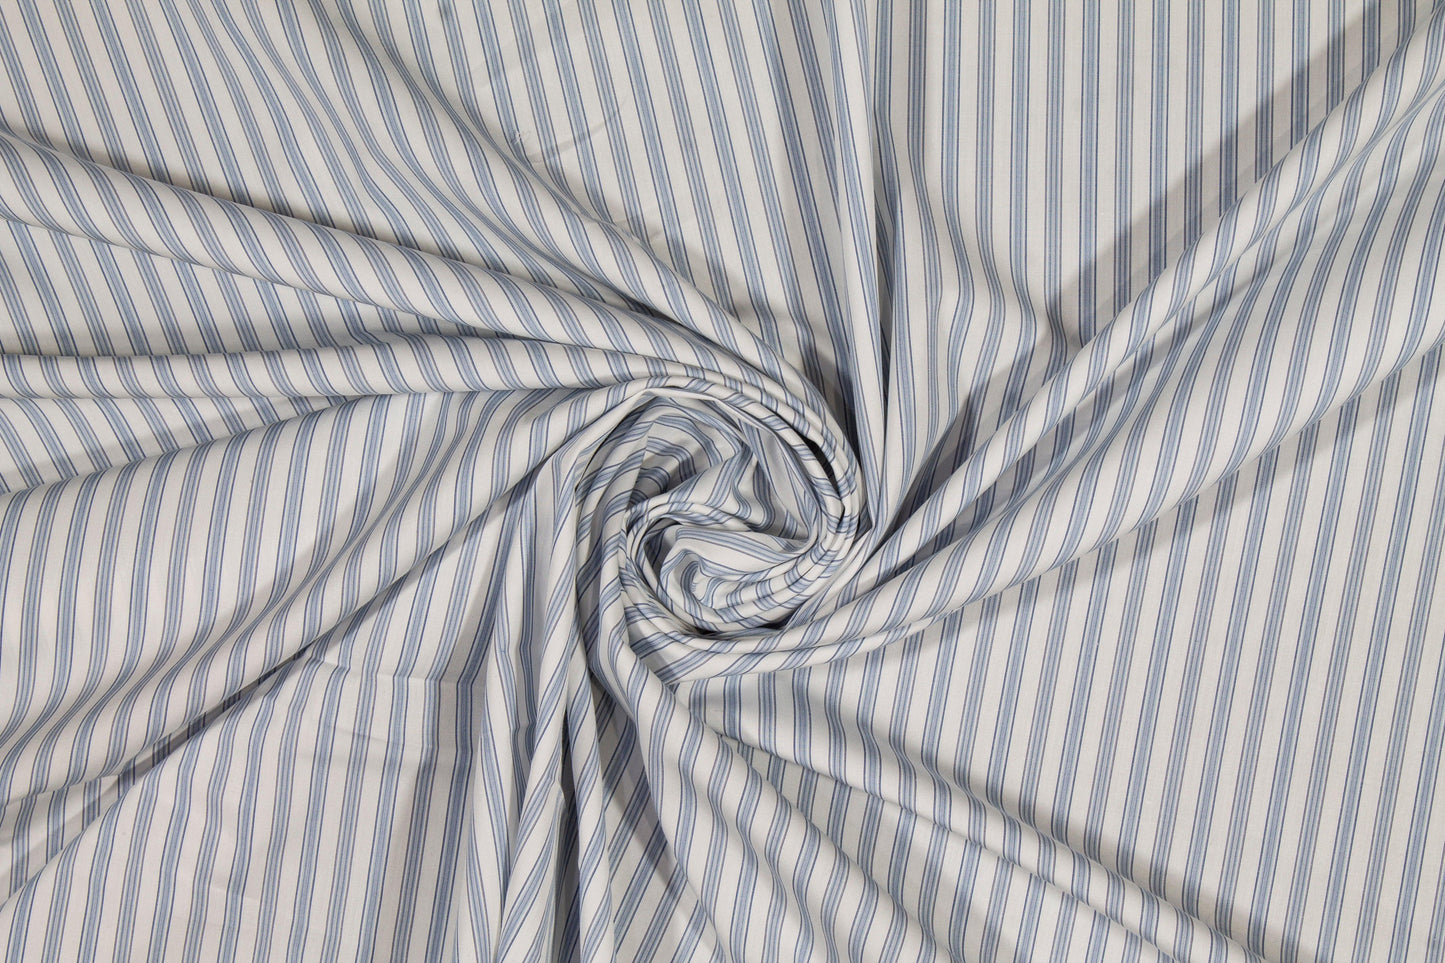 Striped Cotton Shirting - Blue and White - Prime Fabrics